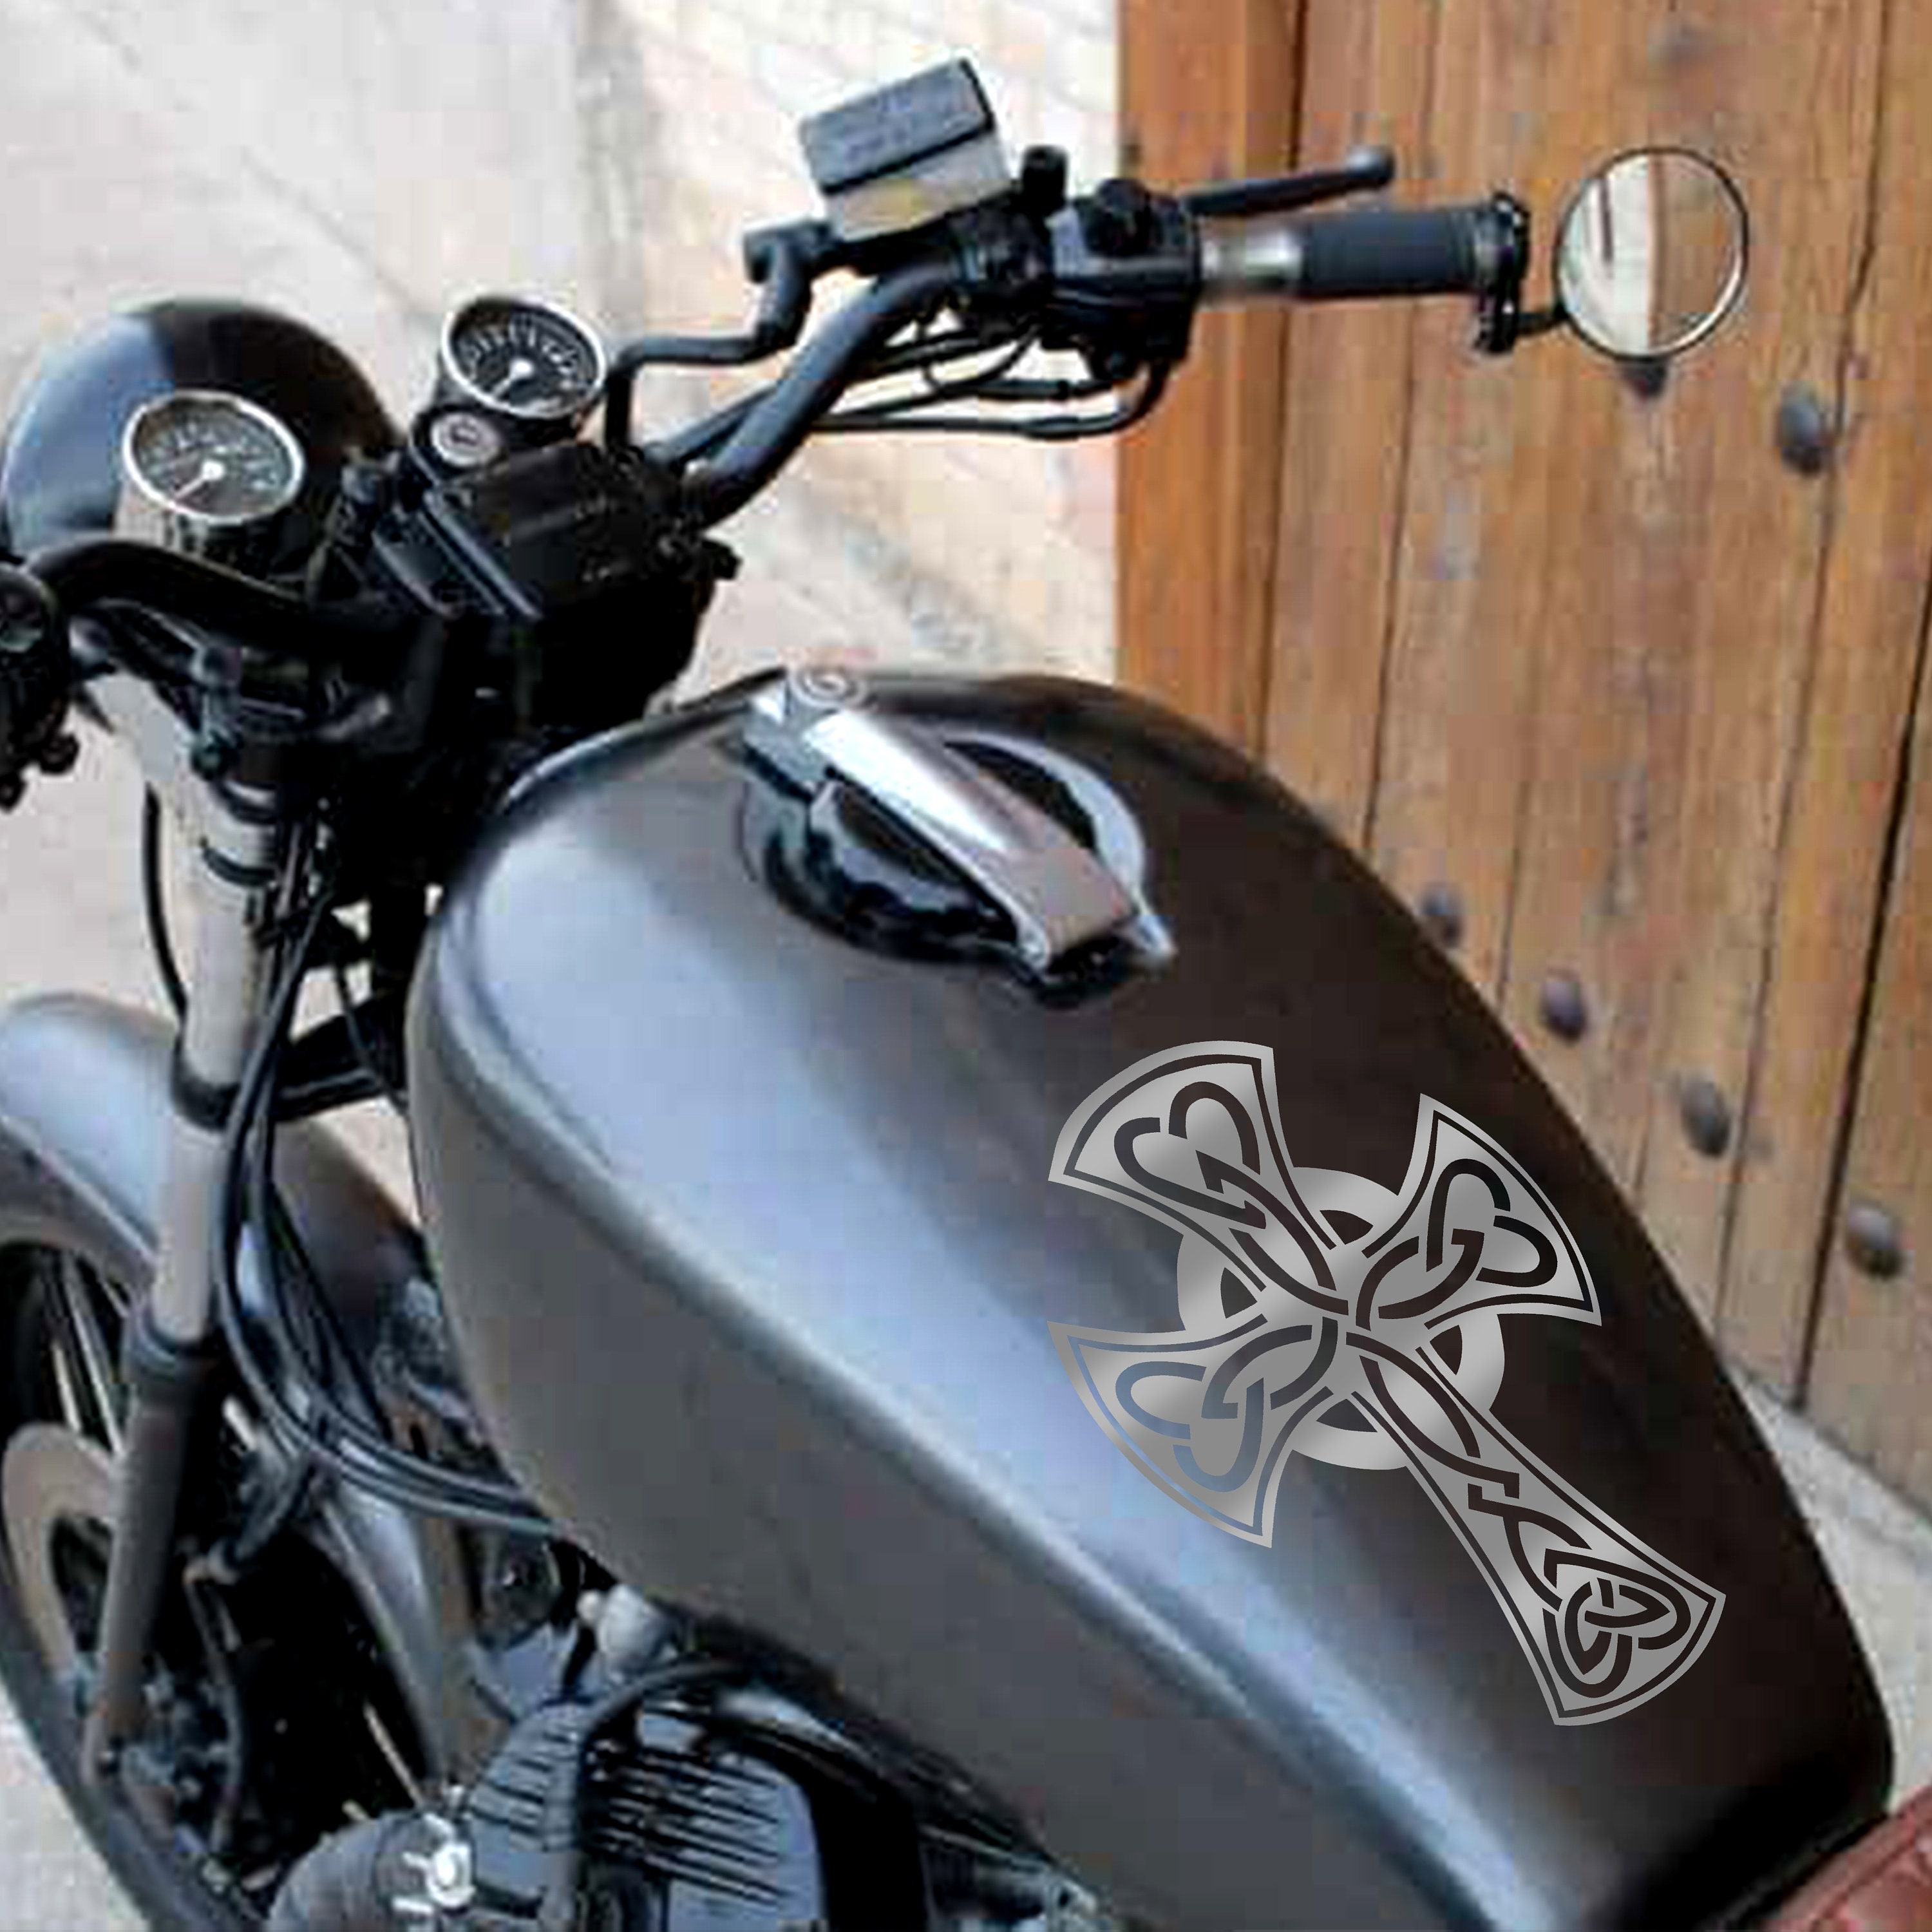 Motorrad Aufkleber Gas Tank Aufkleber / Skin eagle Vinyl Fahrrad Aufkleber  2 Stück ein Aufkleber für jede Seite. - .de